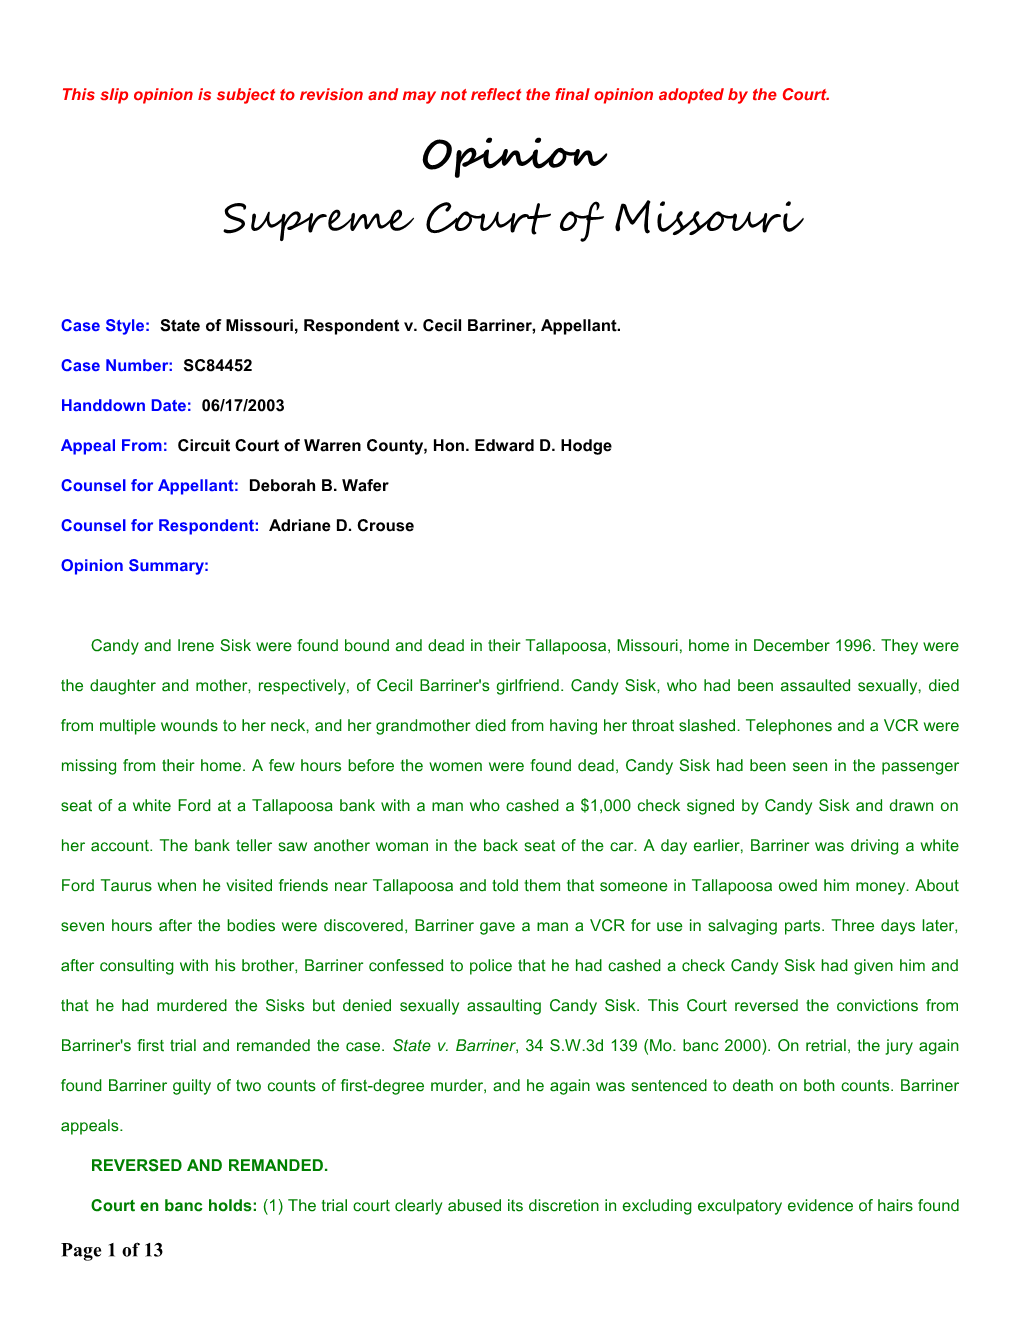 Case Style: State of Missouri, Respondent V. Cecil Barriner, Appellant